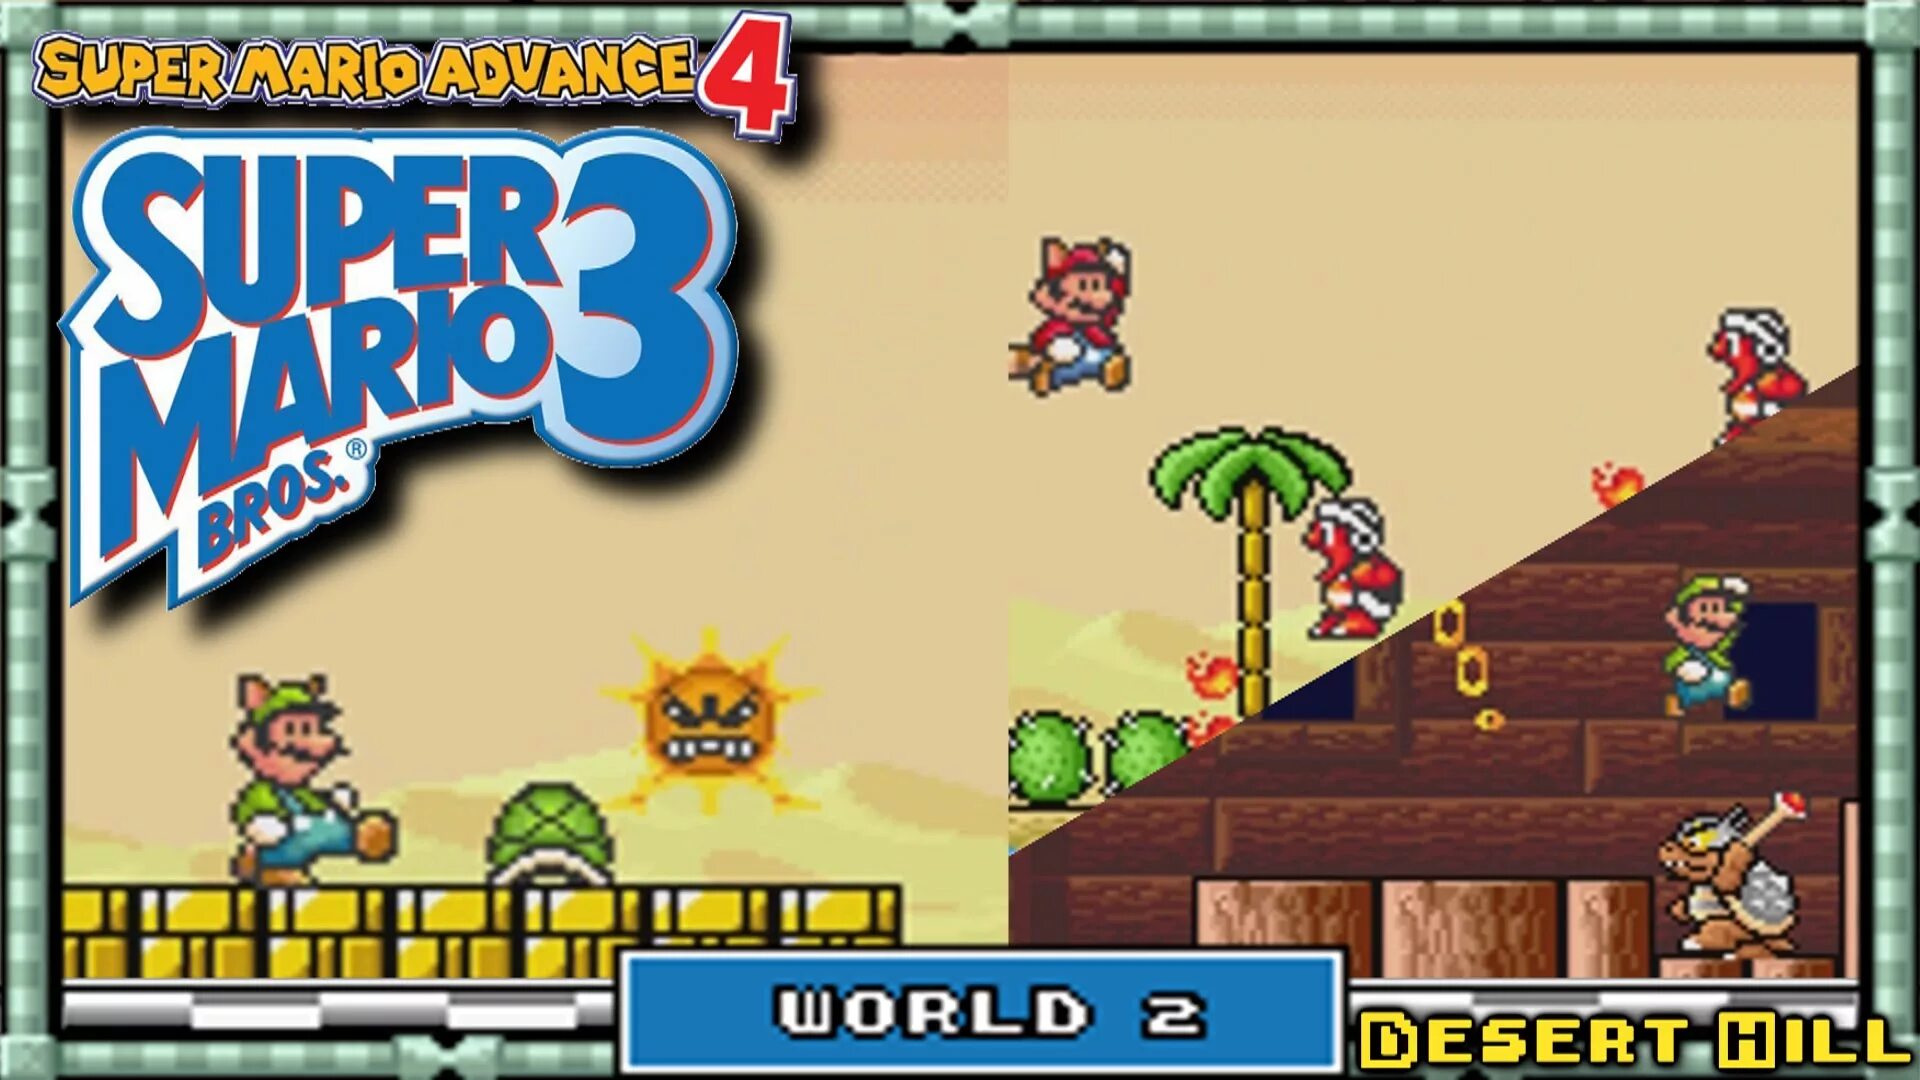 Mario bros advance. Super Mario World: super Mario Bros. 4. Марио БРОС 3. Супер Марио адванс 3 супер Марио 3. Супер Марио адванс 4.